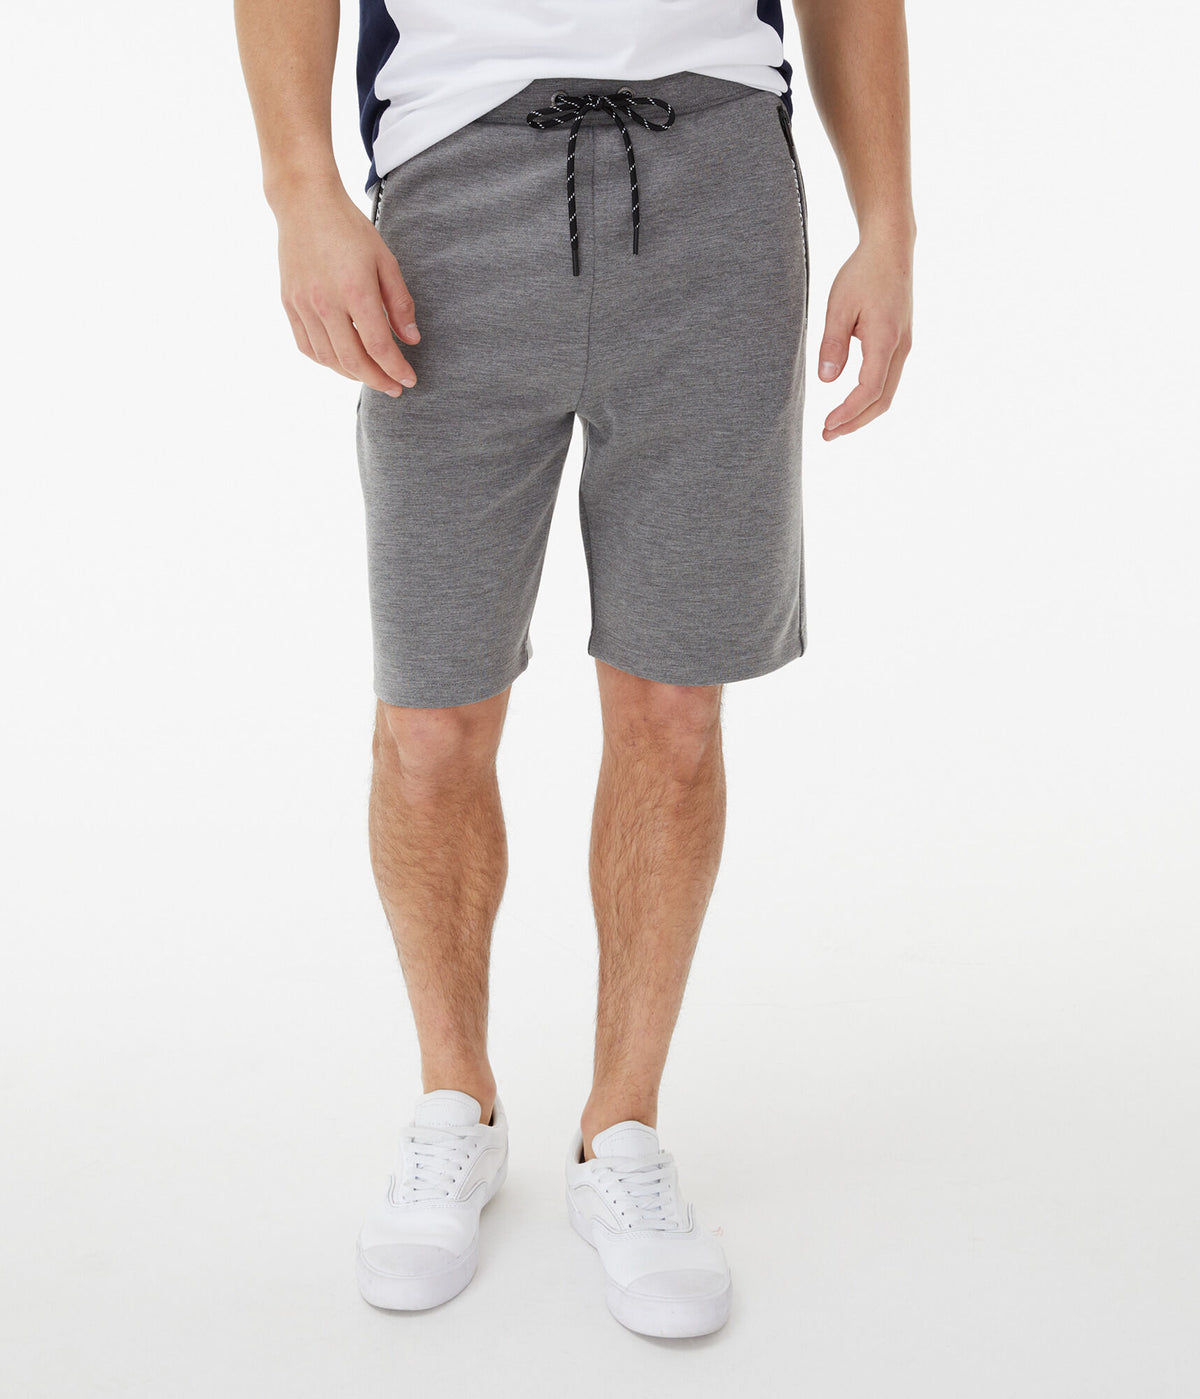 Aeropostale Mens' Air Softspun Tech Fleece Shorts - Grey - Size S - Polyester - Teen Fashion & Clothing Med Hthr Grey